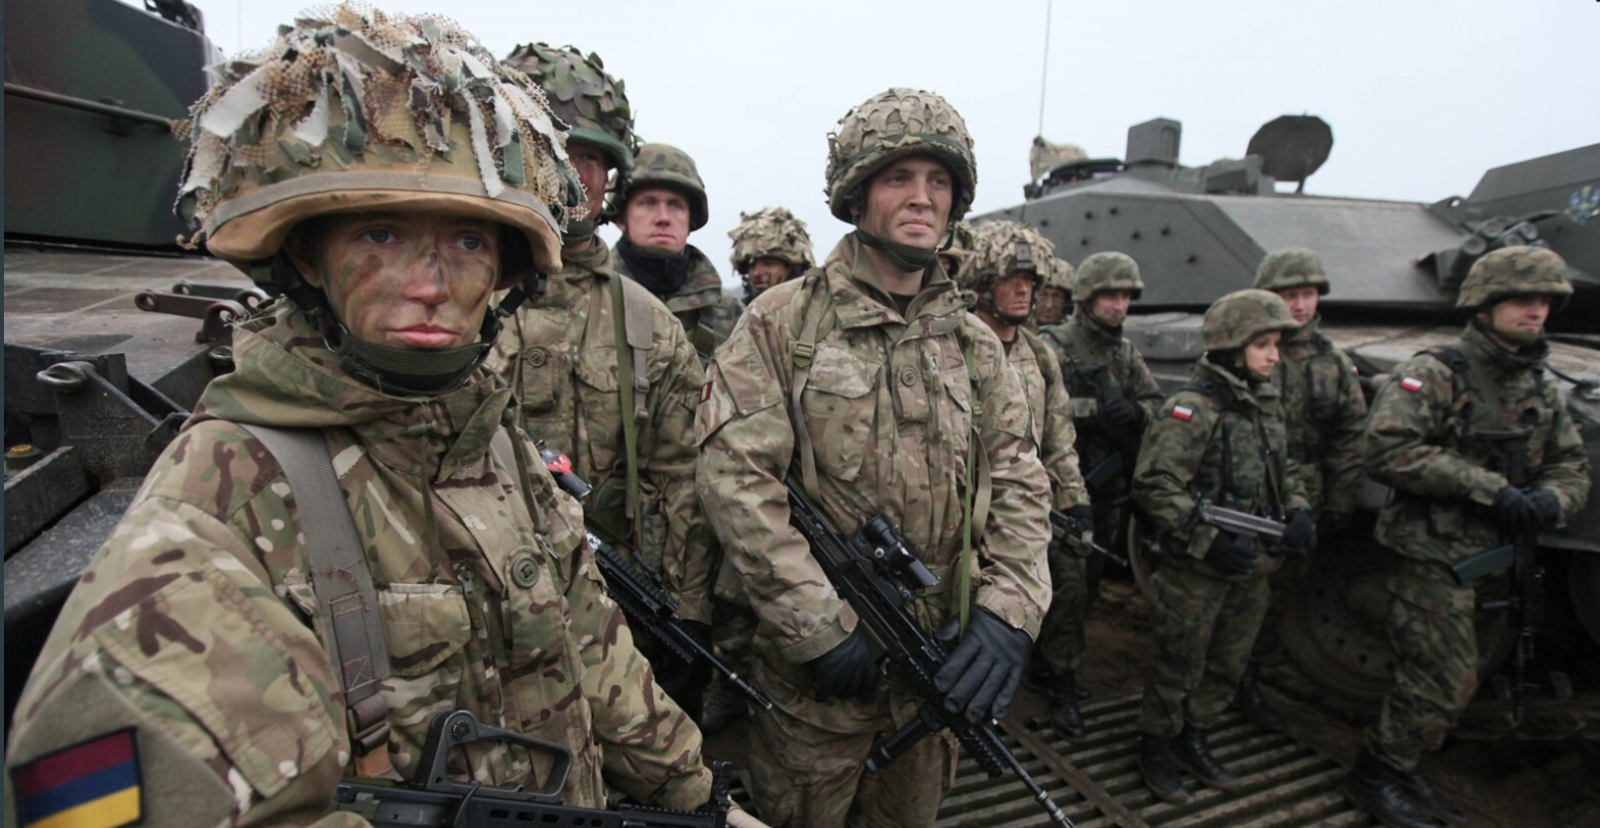 Binh sĩ Anh tham gia cuộc tập trận ở Ba Lan. Ảnh: RFE/RL
